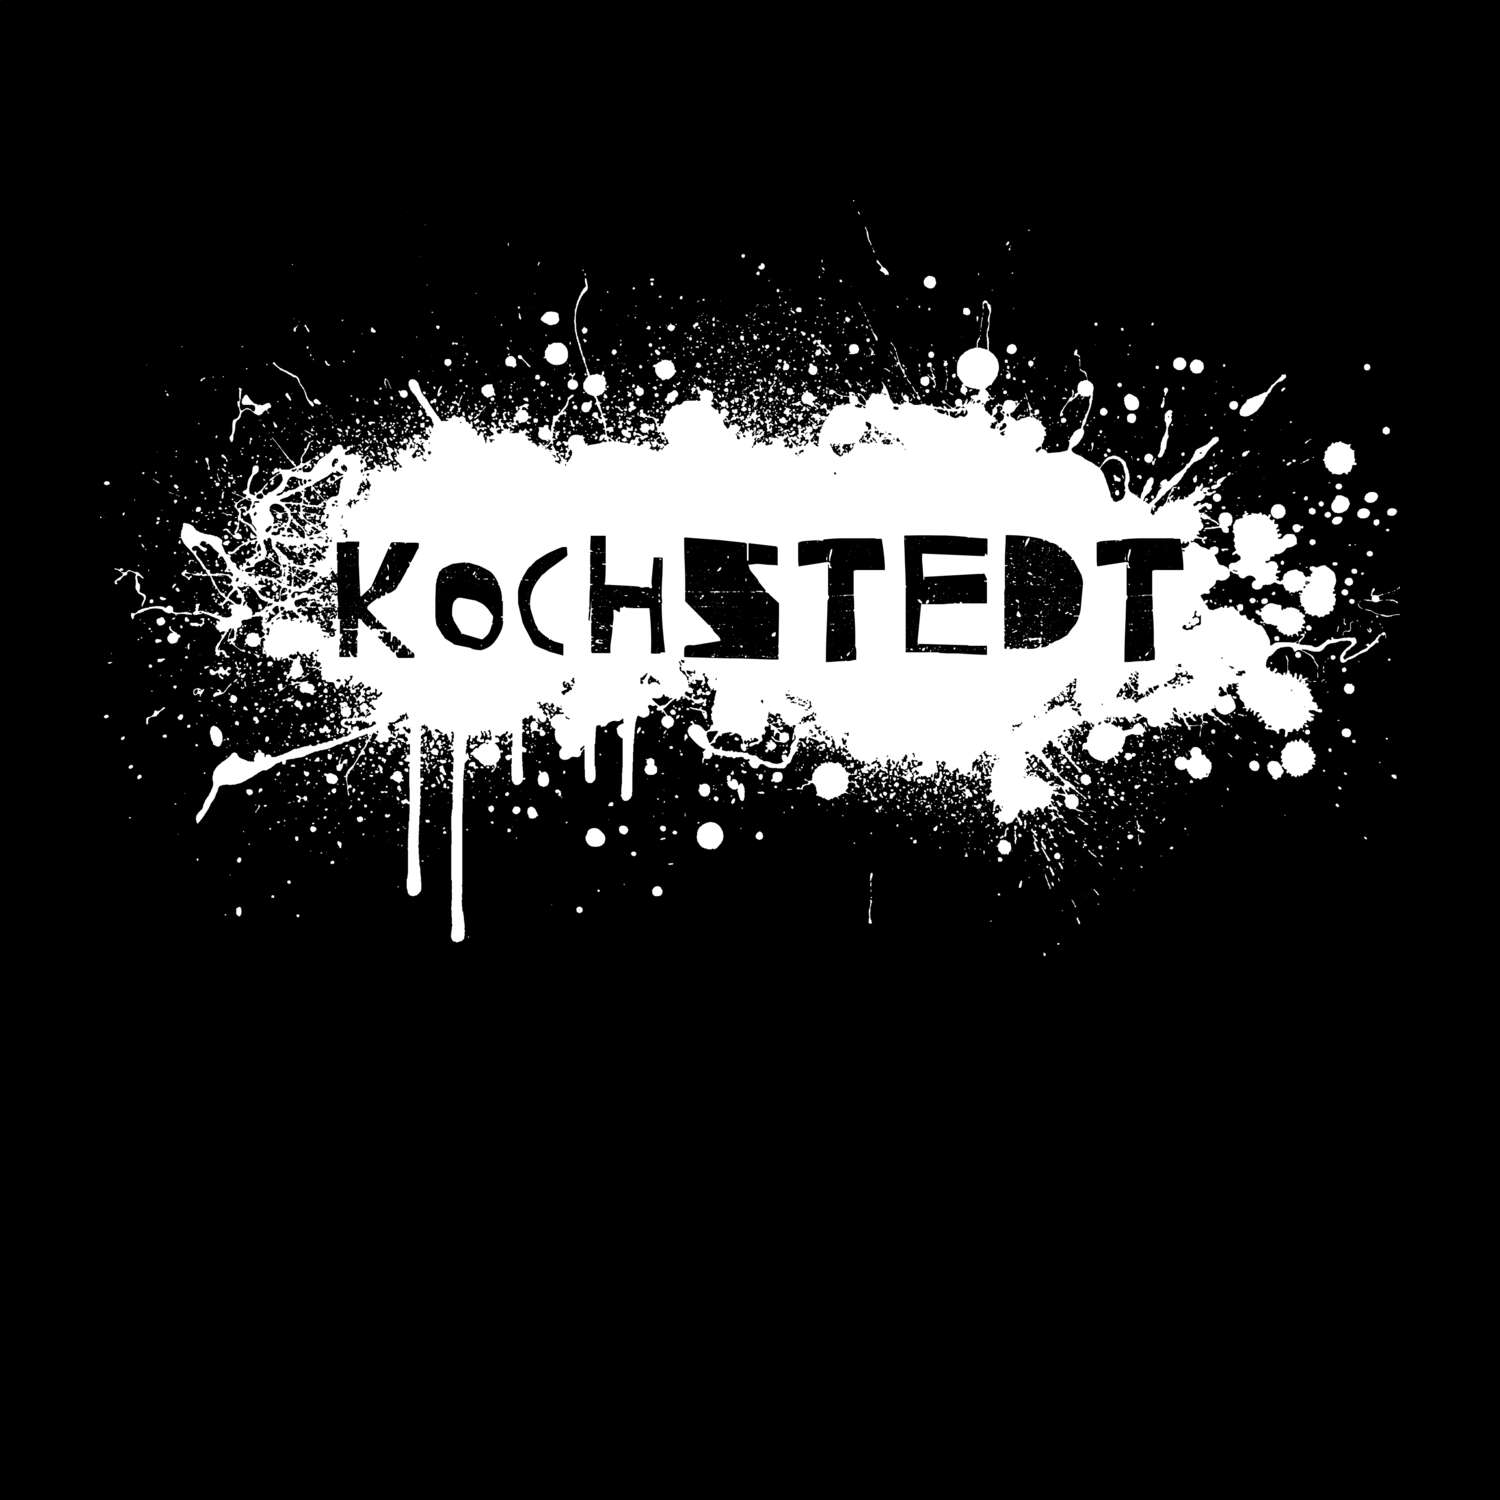 Kochstedt T-Shirt »Paint Splash Punk«